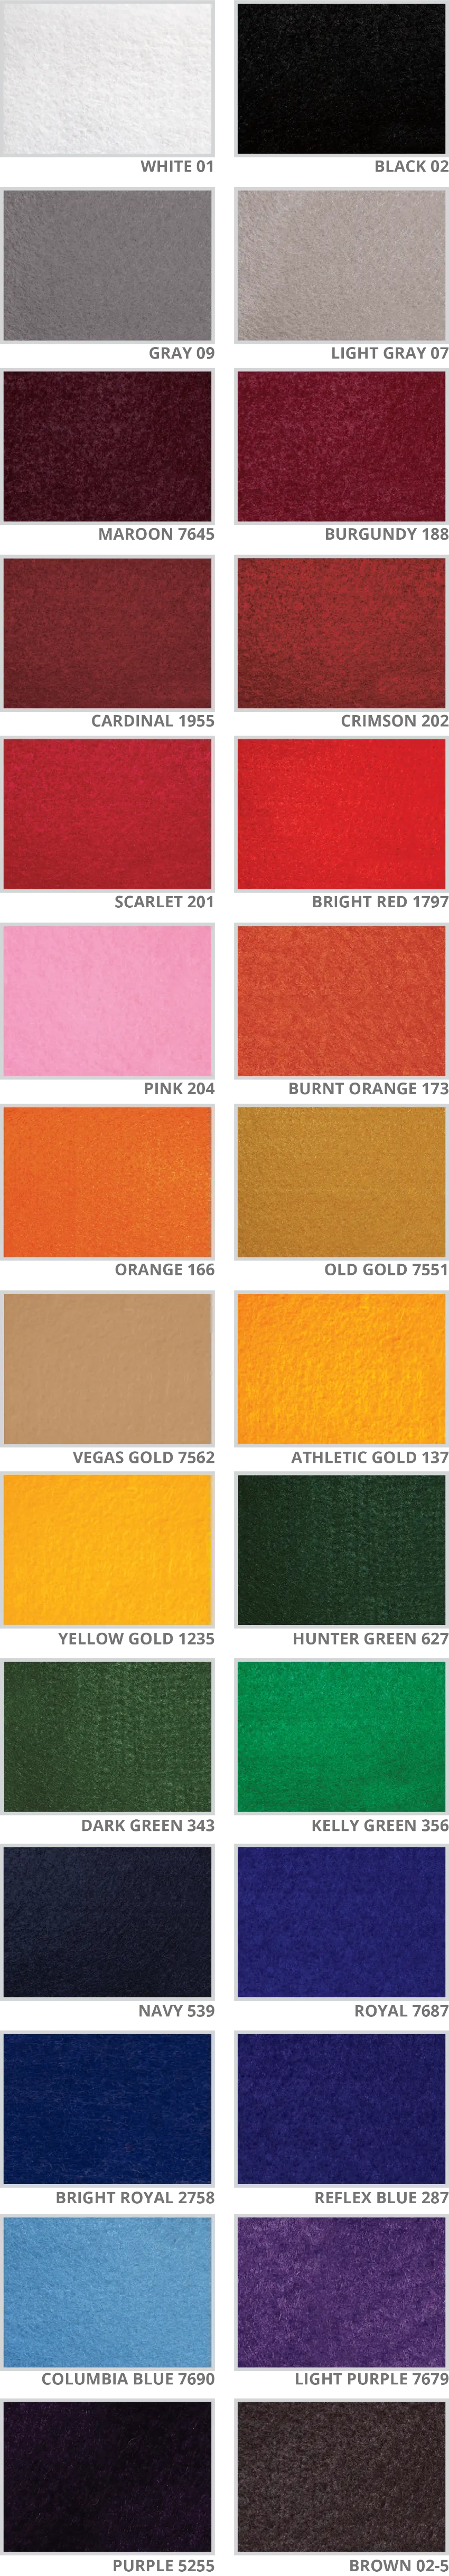 HPI Emblem > Material Colors > Leather Colors